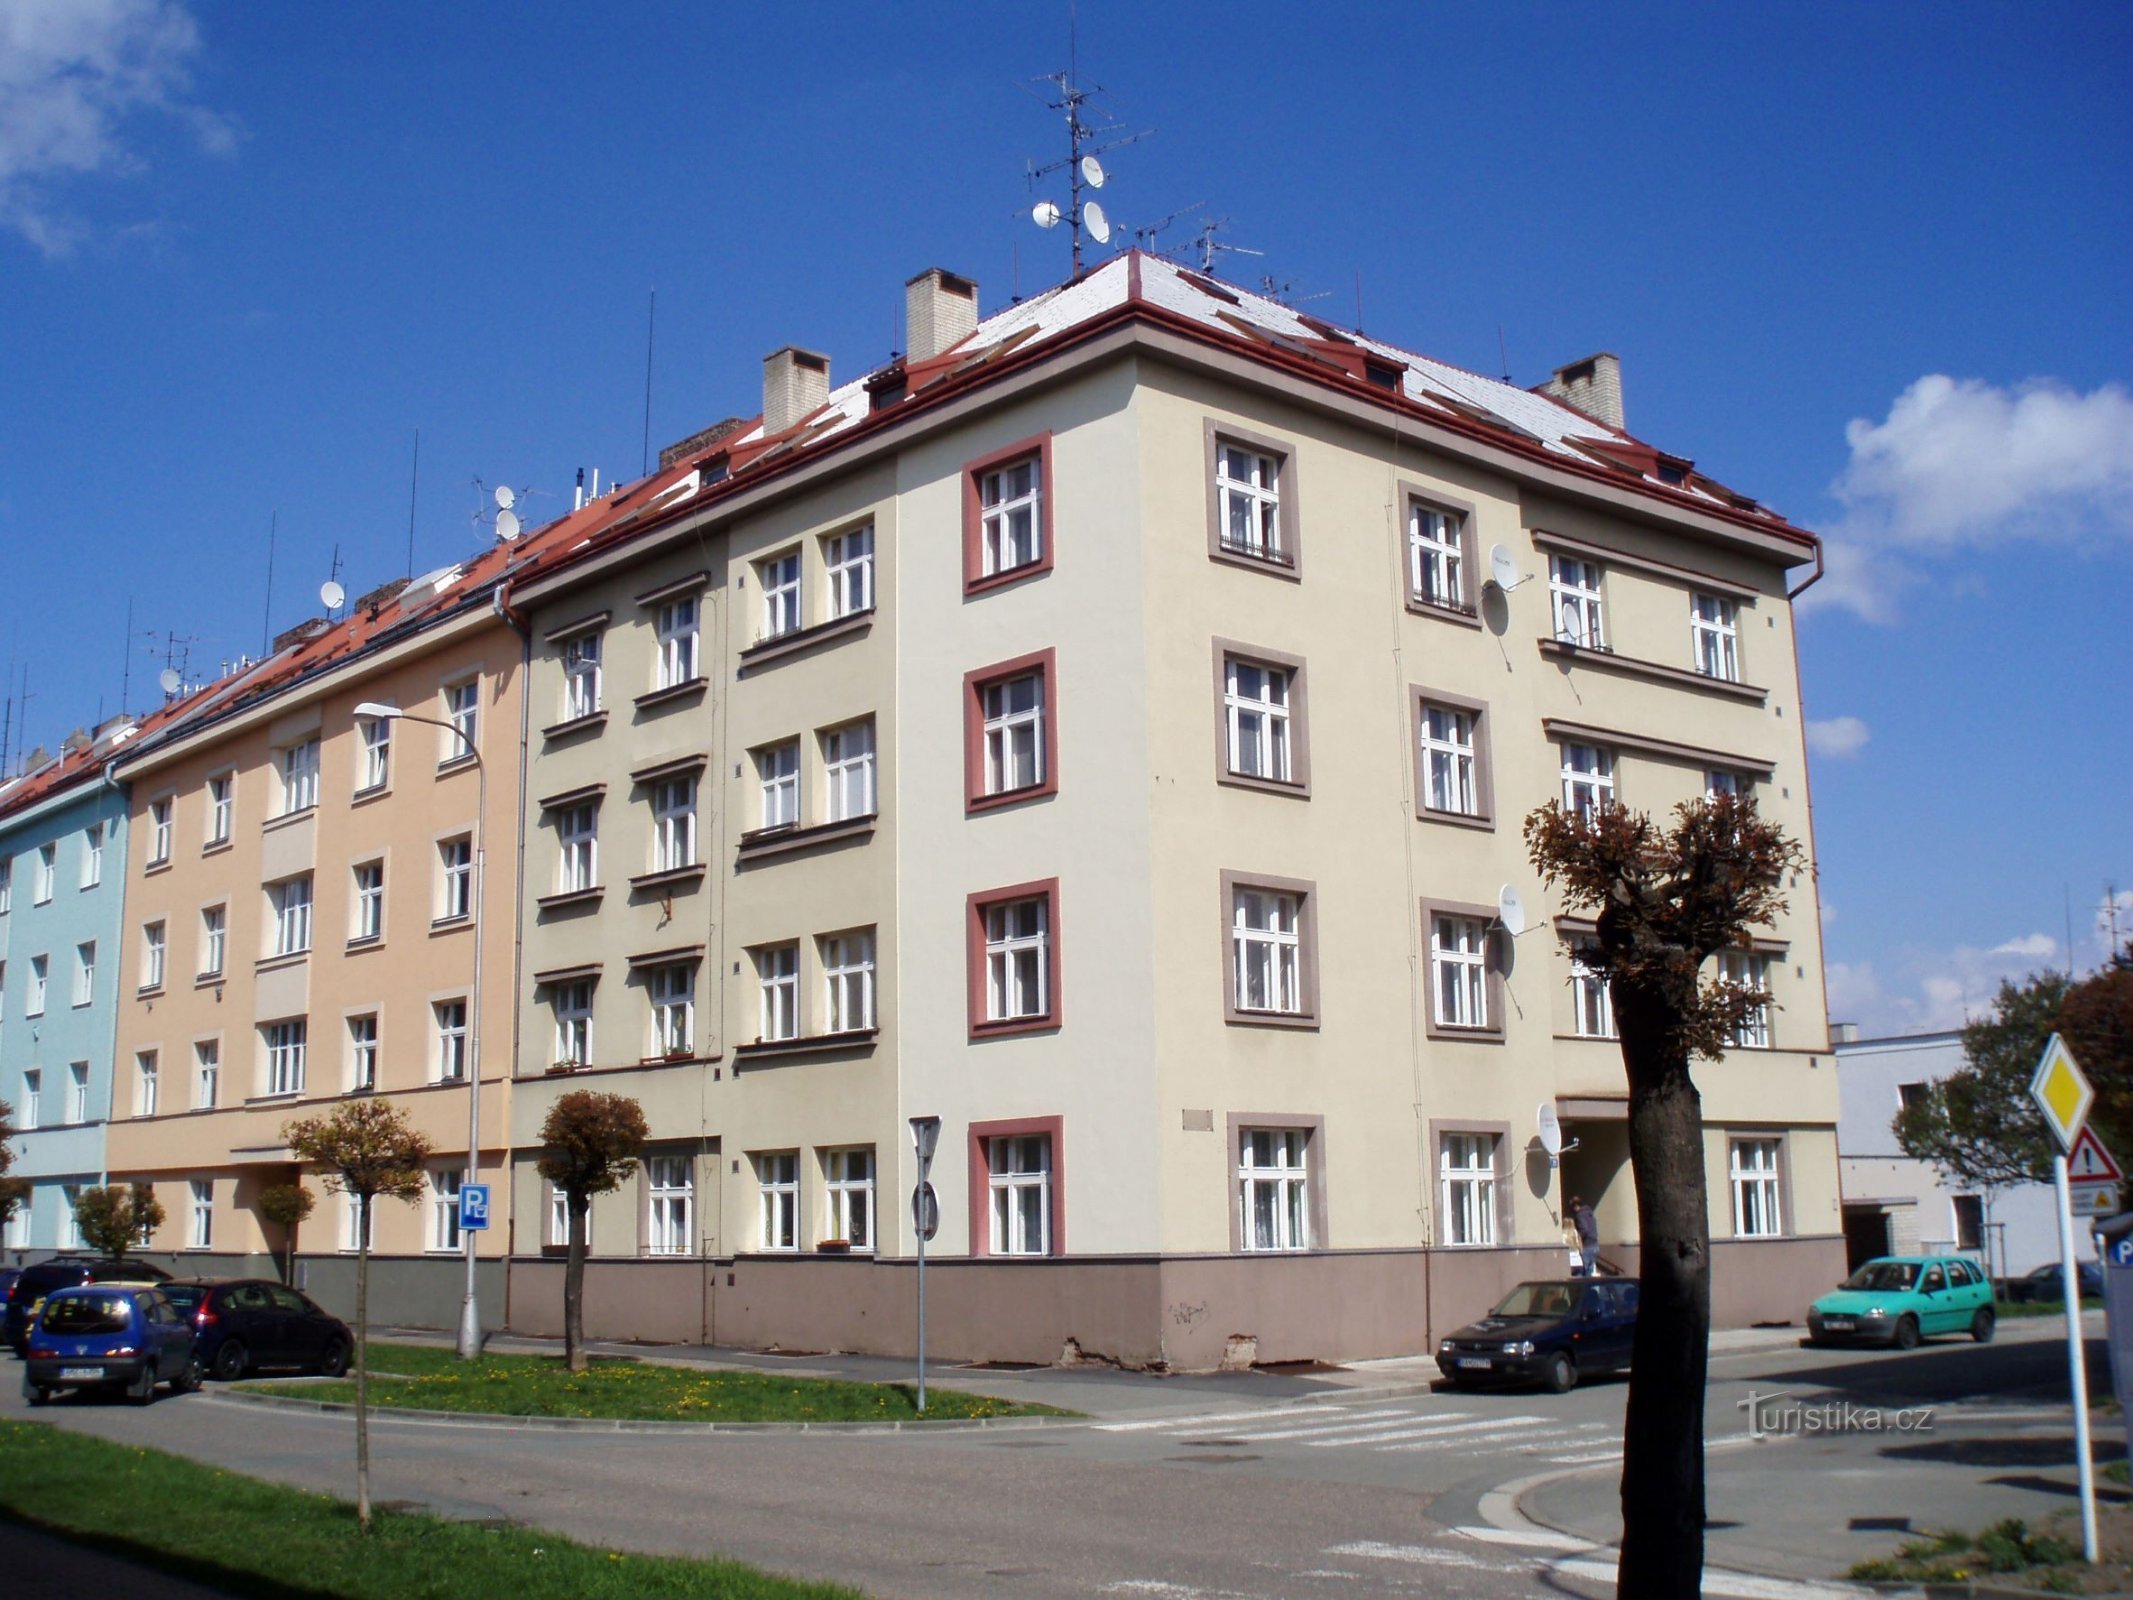 Albertova n. 826 (Hradec Králové, 21.4.2012 aprile XNUMX)